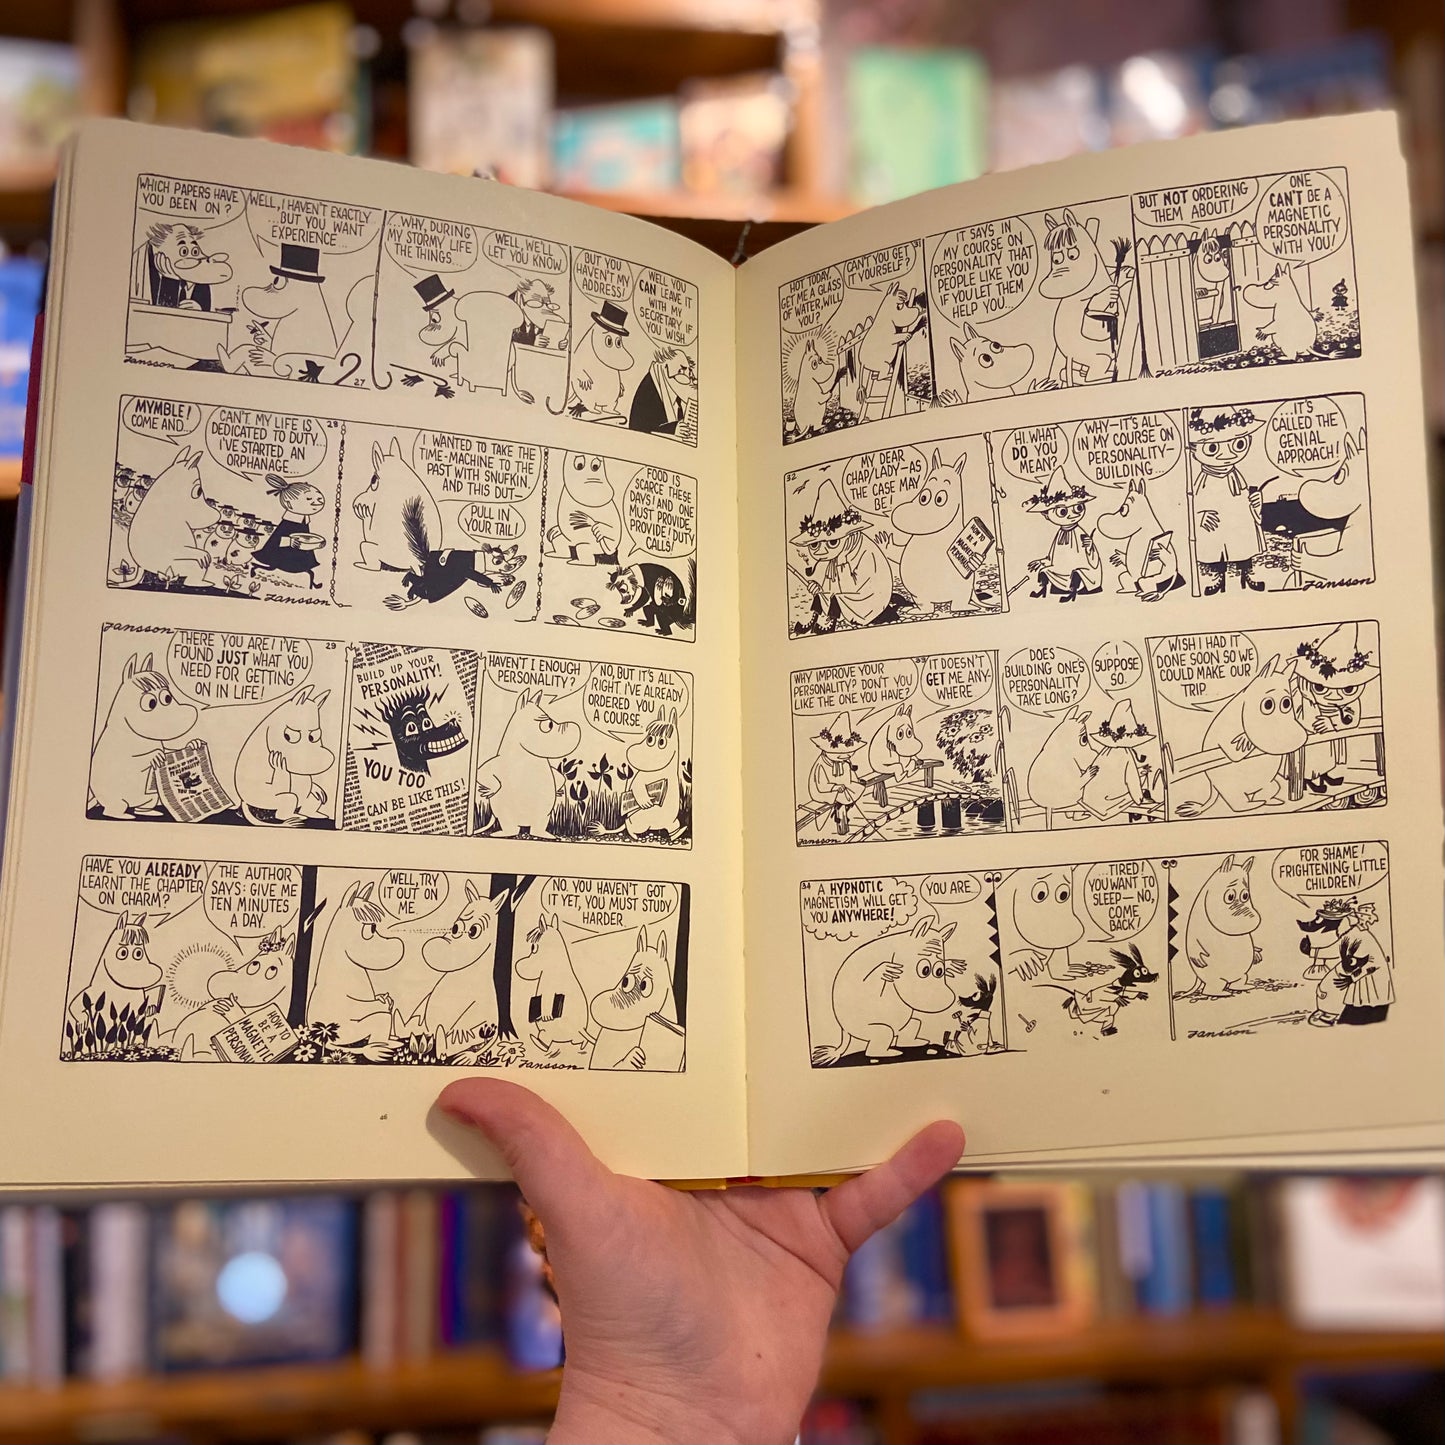 Moomin: the Complete Tove Jansson Comic Strip Book 4 – Tove Jansson